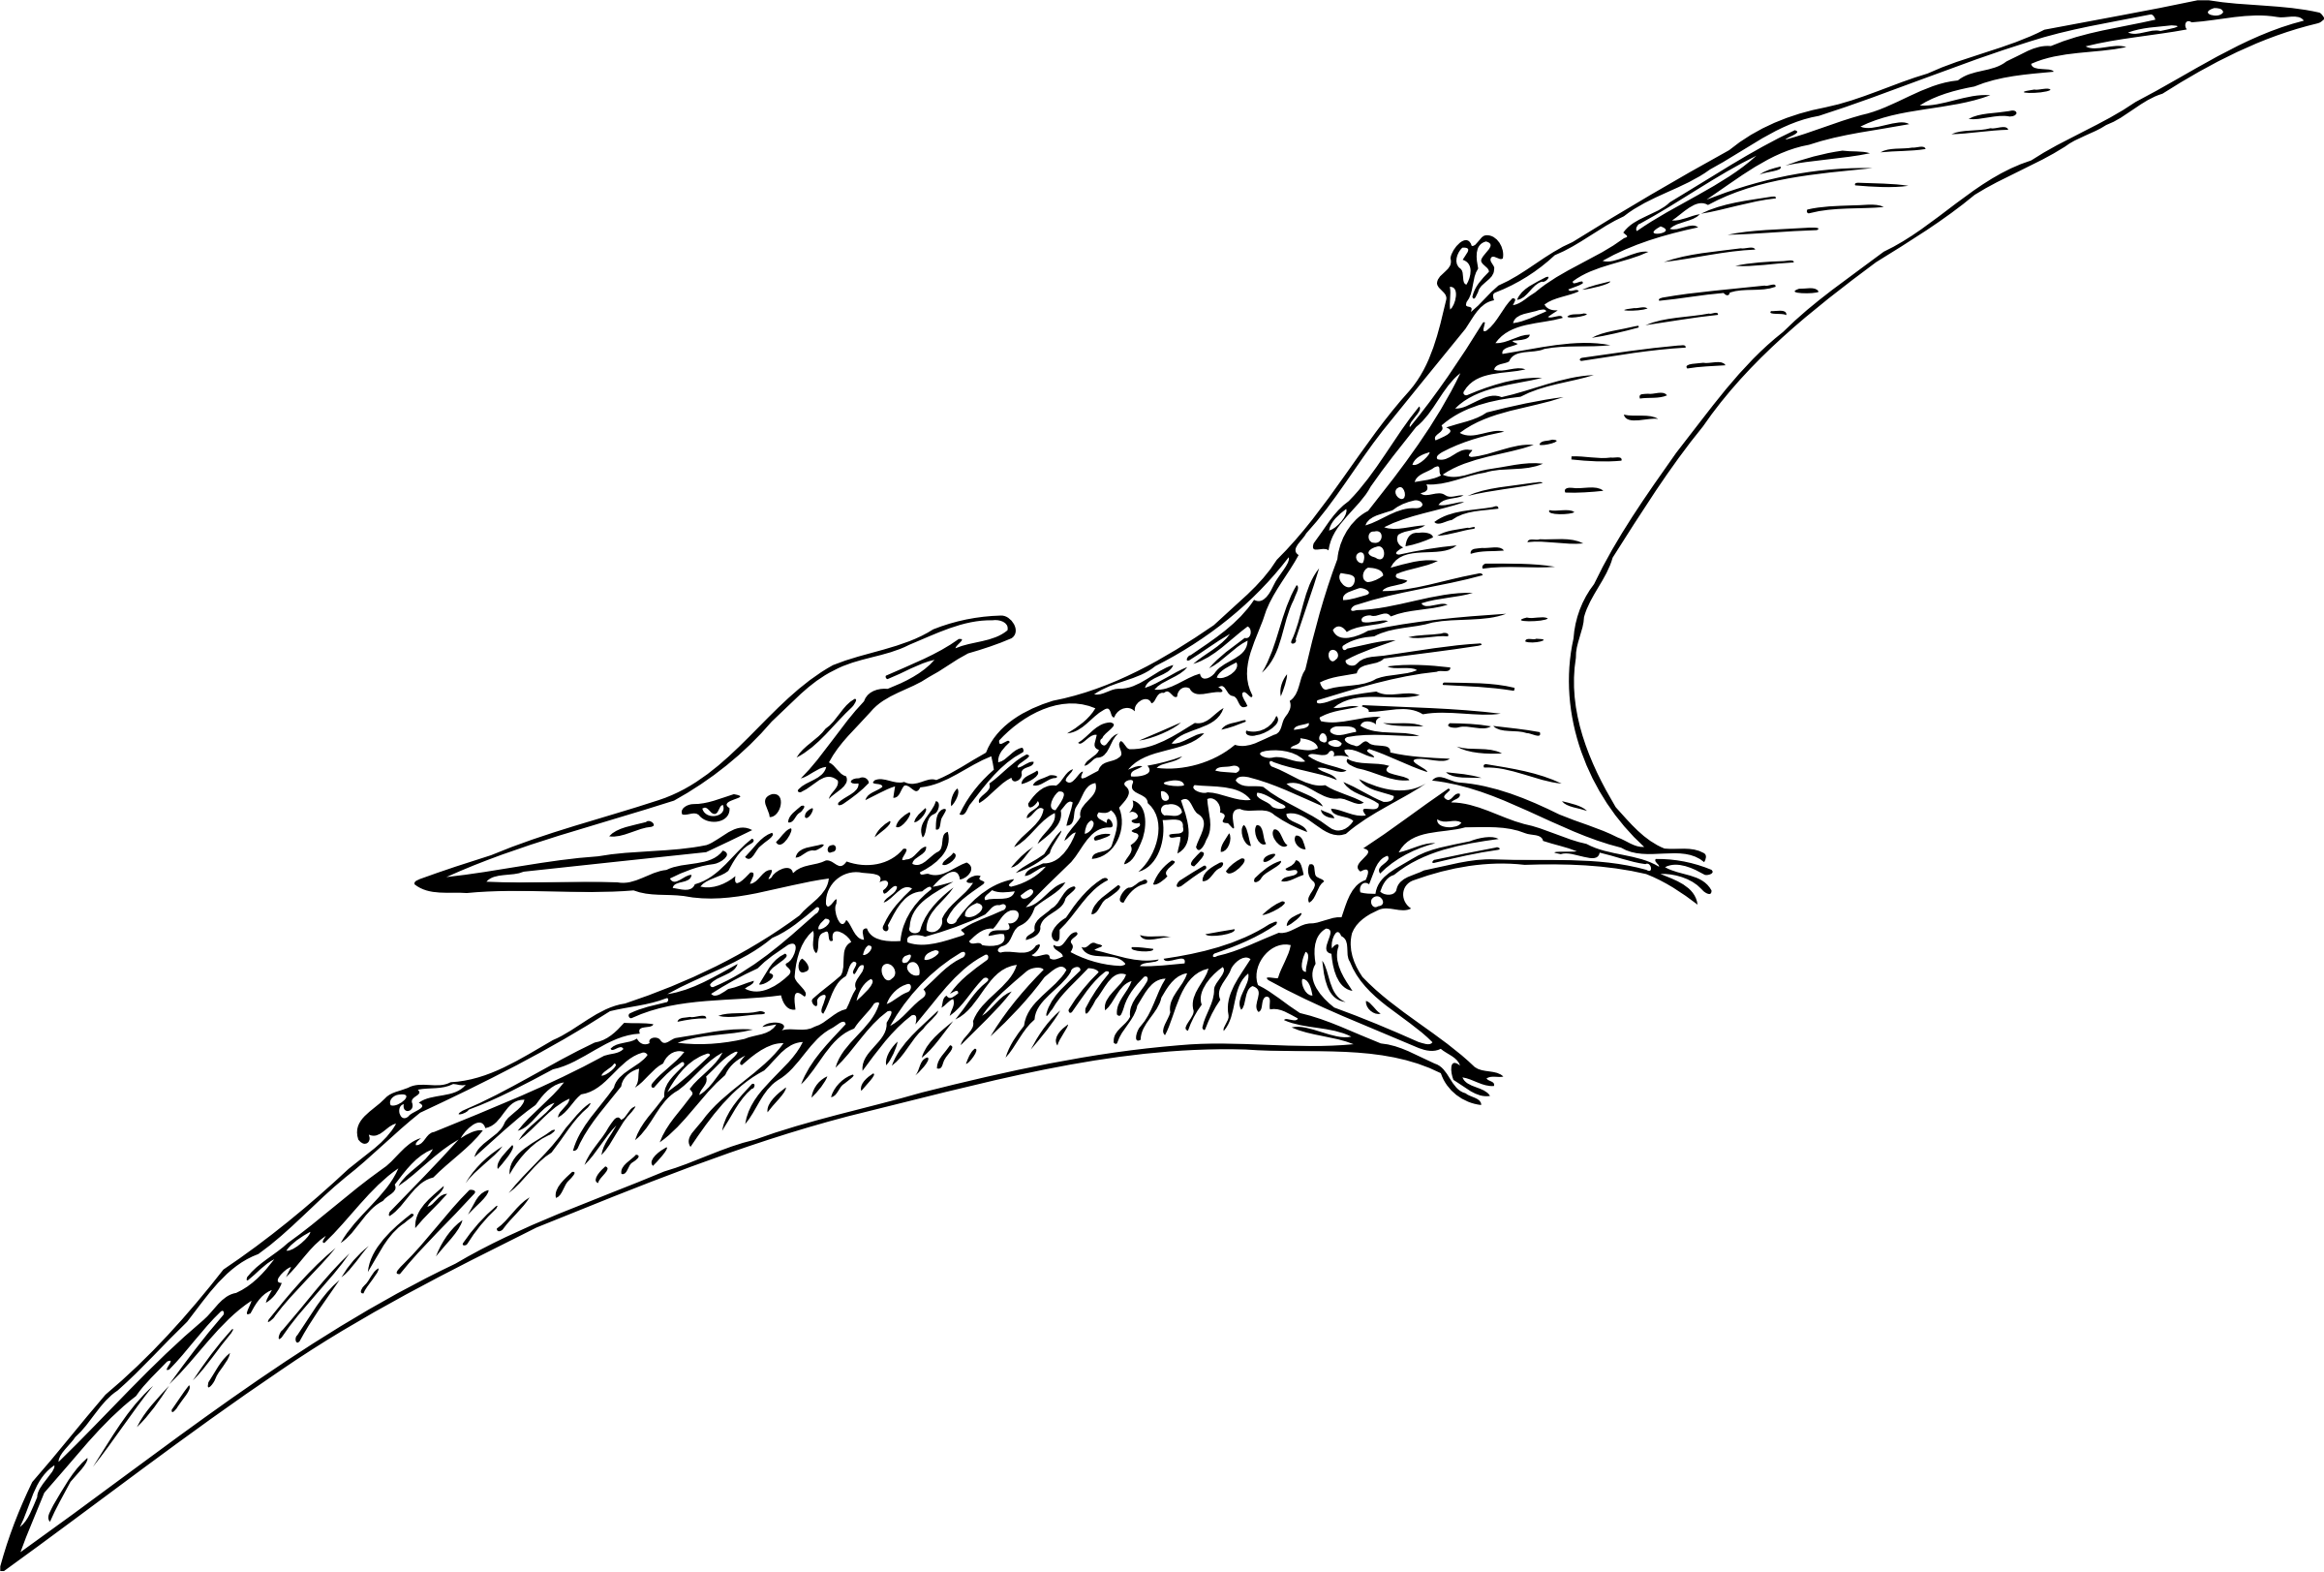 Free - Pterodactyl Black And White (2400x1623)